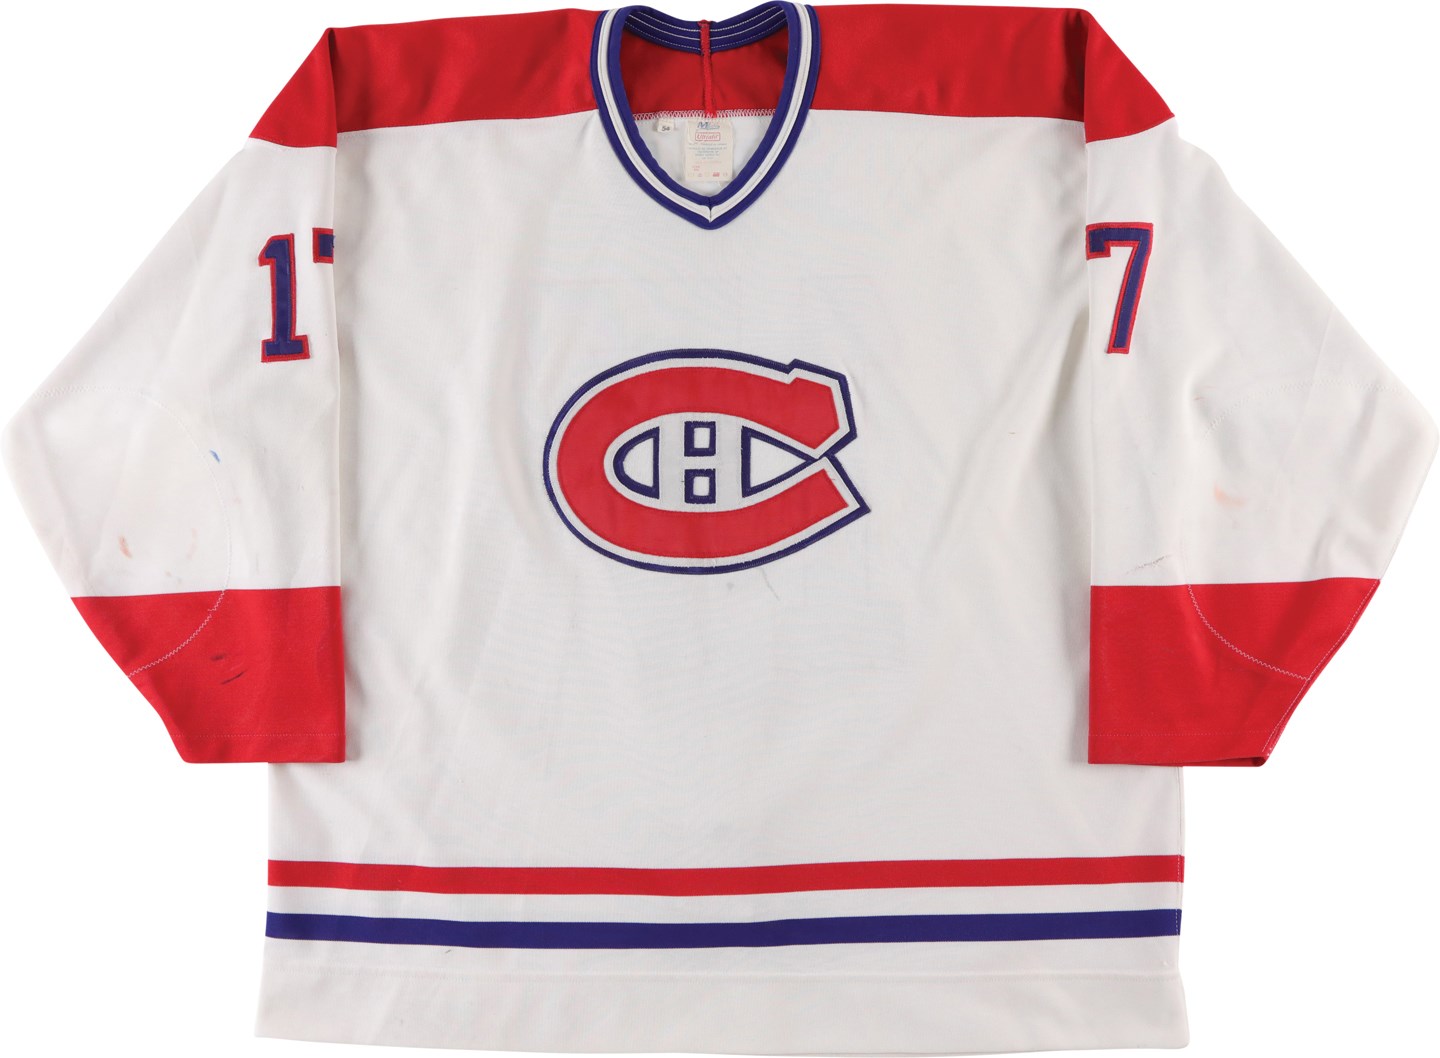 Hockey - 1993-94 John LeClair Montreal Canadiens Game Worn Jersey